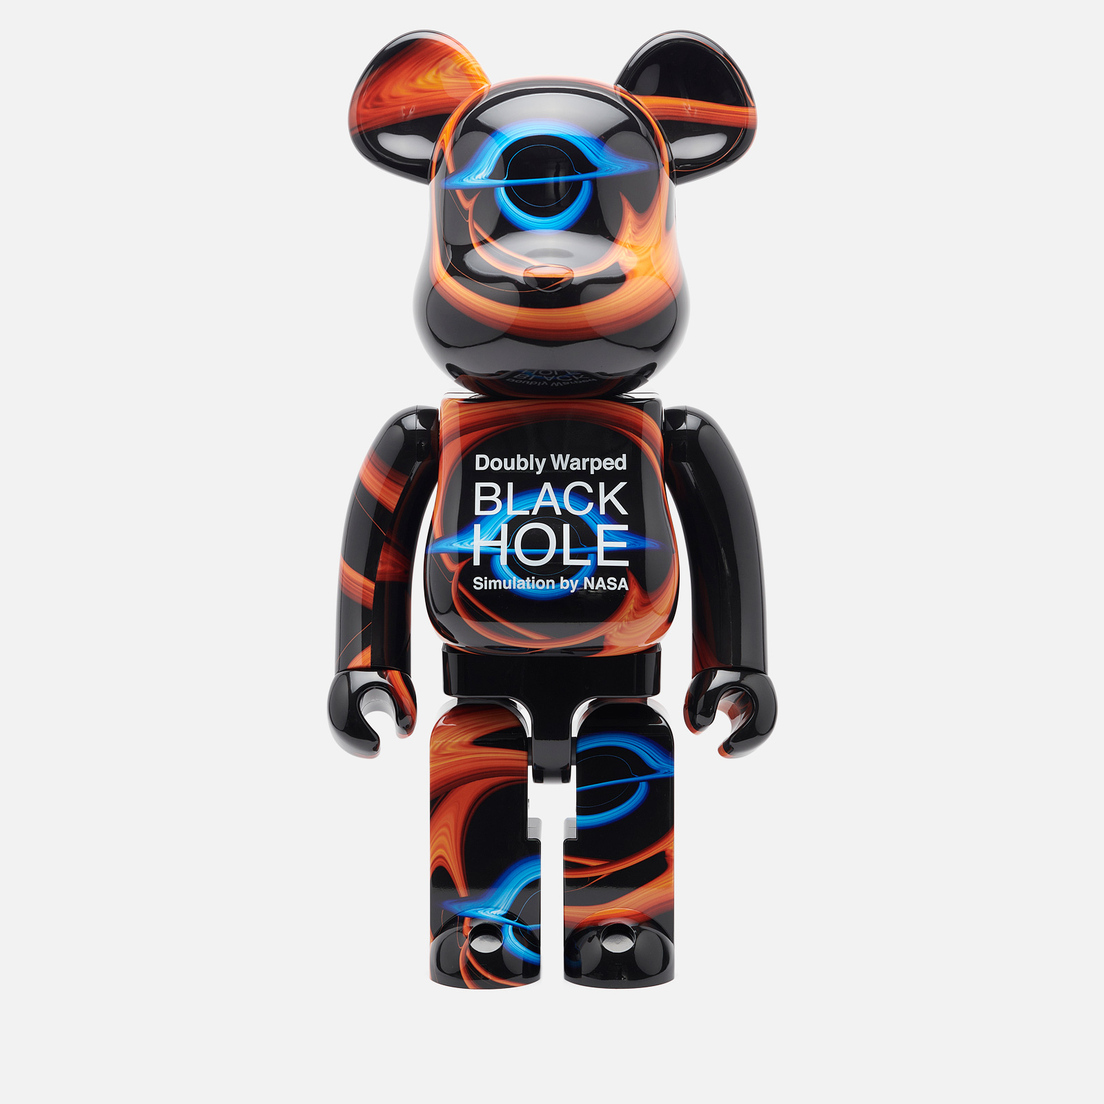 Medicom Toy Игрушка Doubly Warped Black Hole 1000%